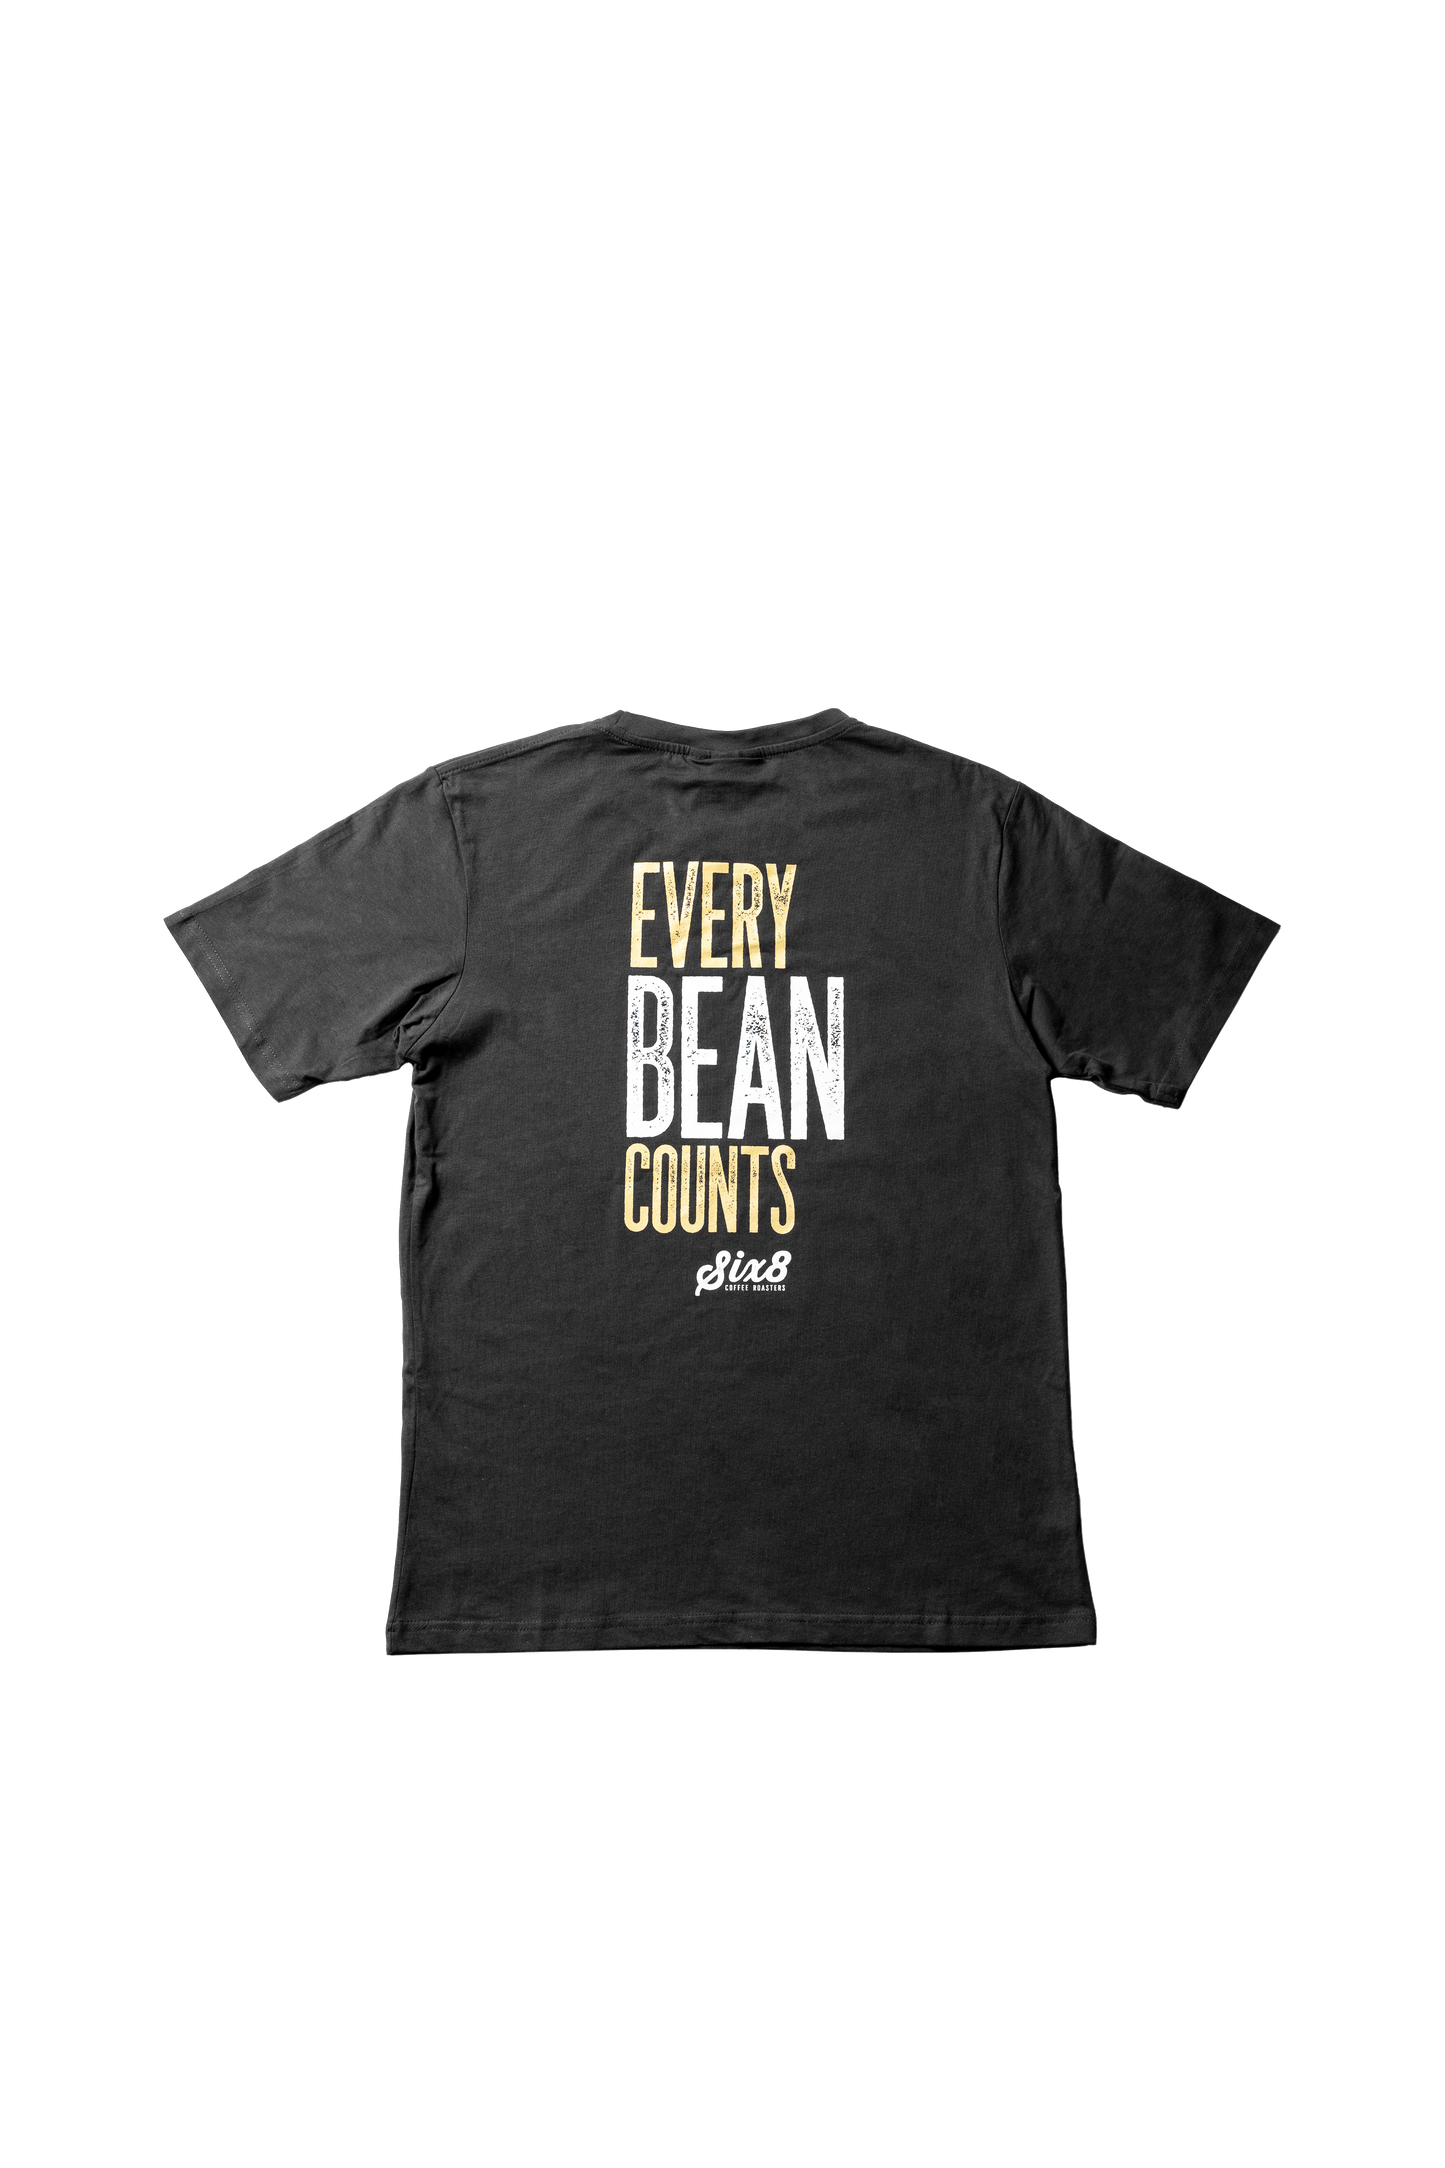 Six8 "Every Bean Counts" Tee - Unisex